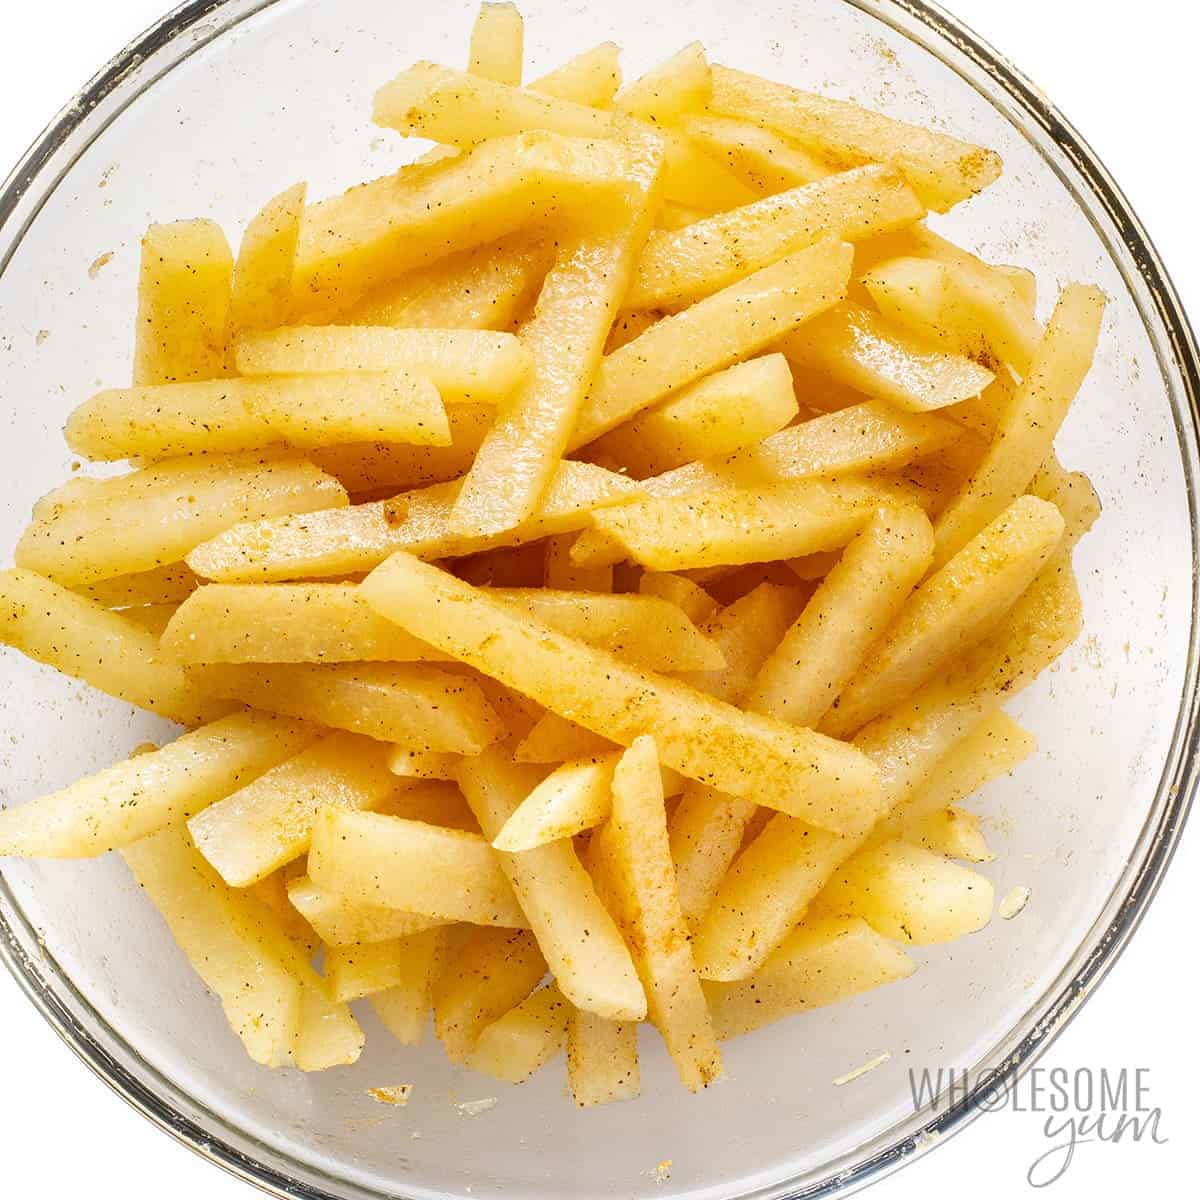 Seasoned jicama fries in a bowl.